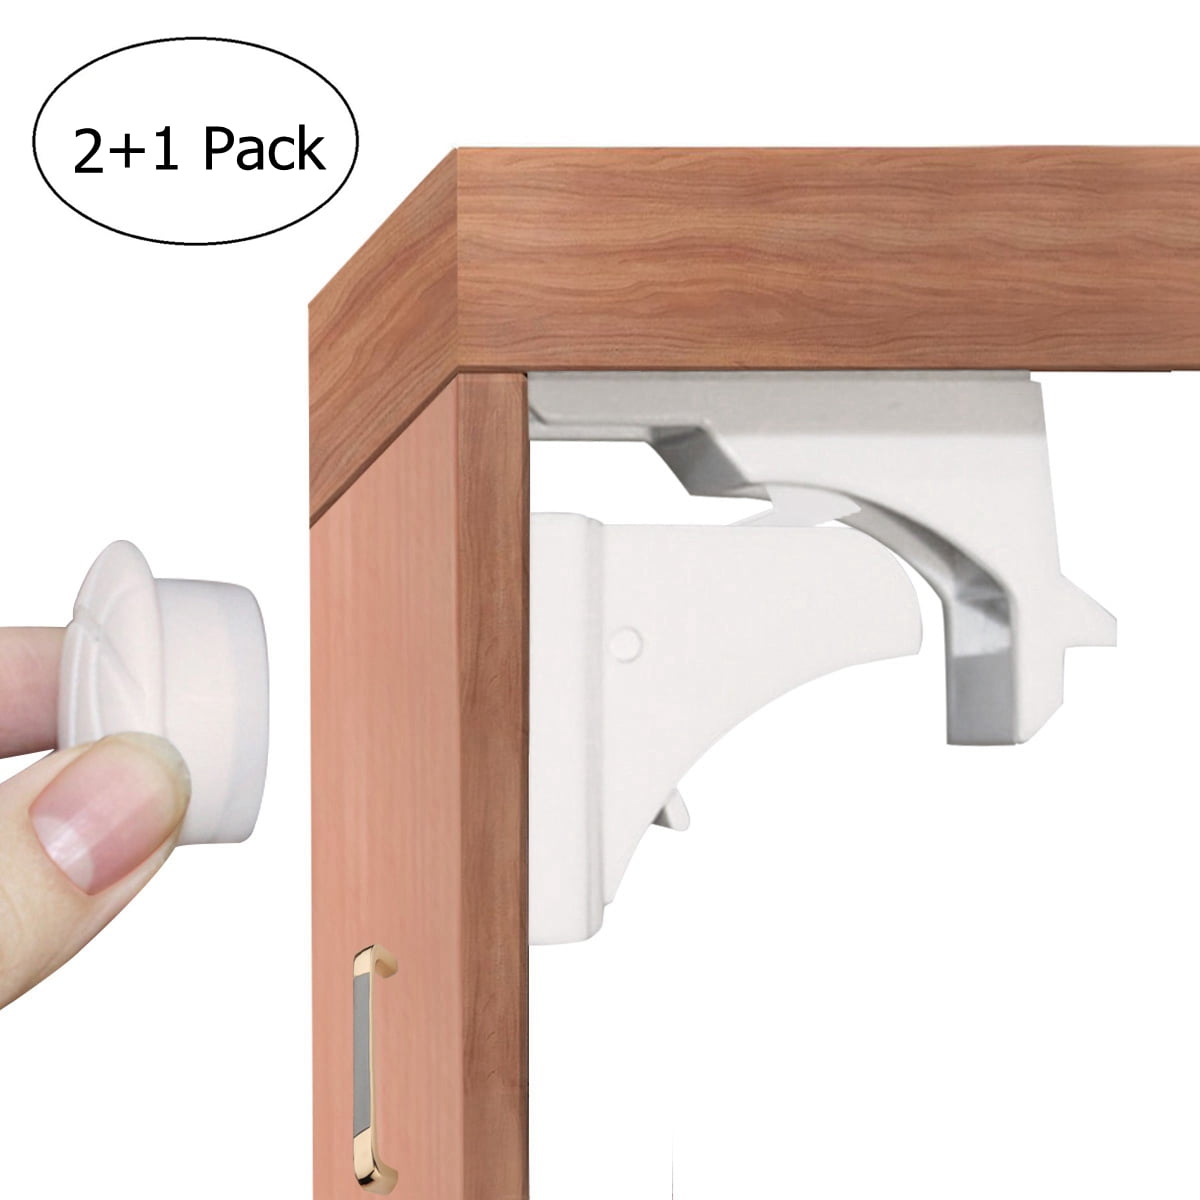 Tqs Magnetic Cabinet Locks Toodler Baby Proofing Safe Kitchen Cabinets Hook - No Draw No Drilling No Pinched Finger[4-Lock 1-Key]